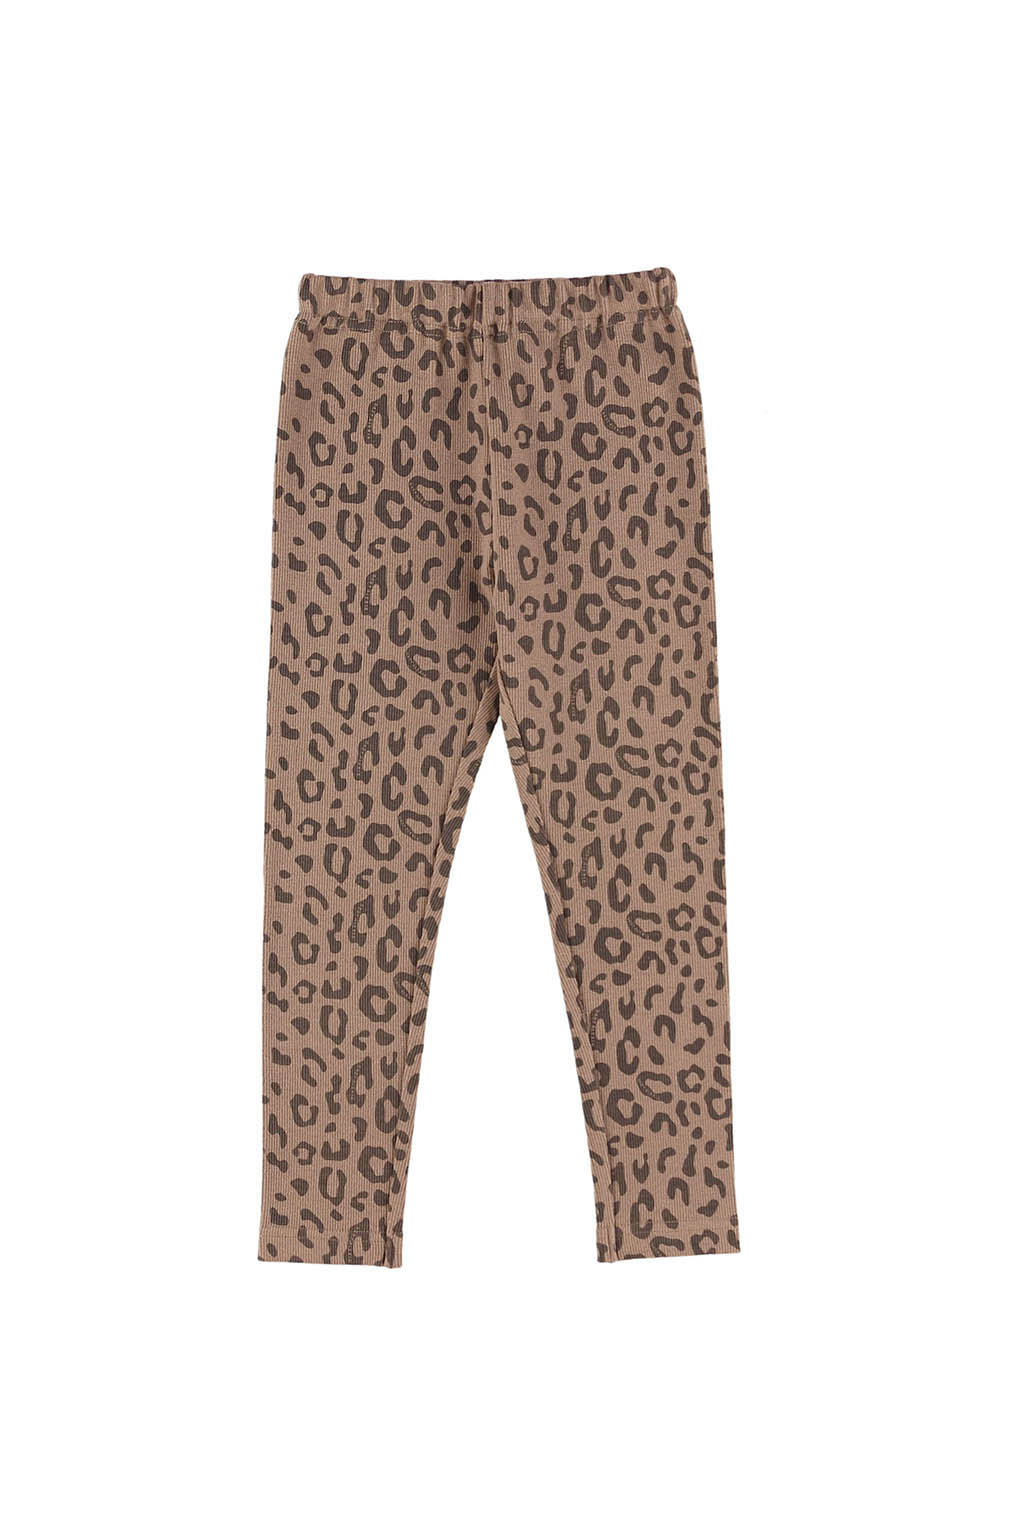 baby-alexia-leopard-leggings-brown-02